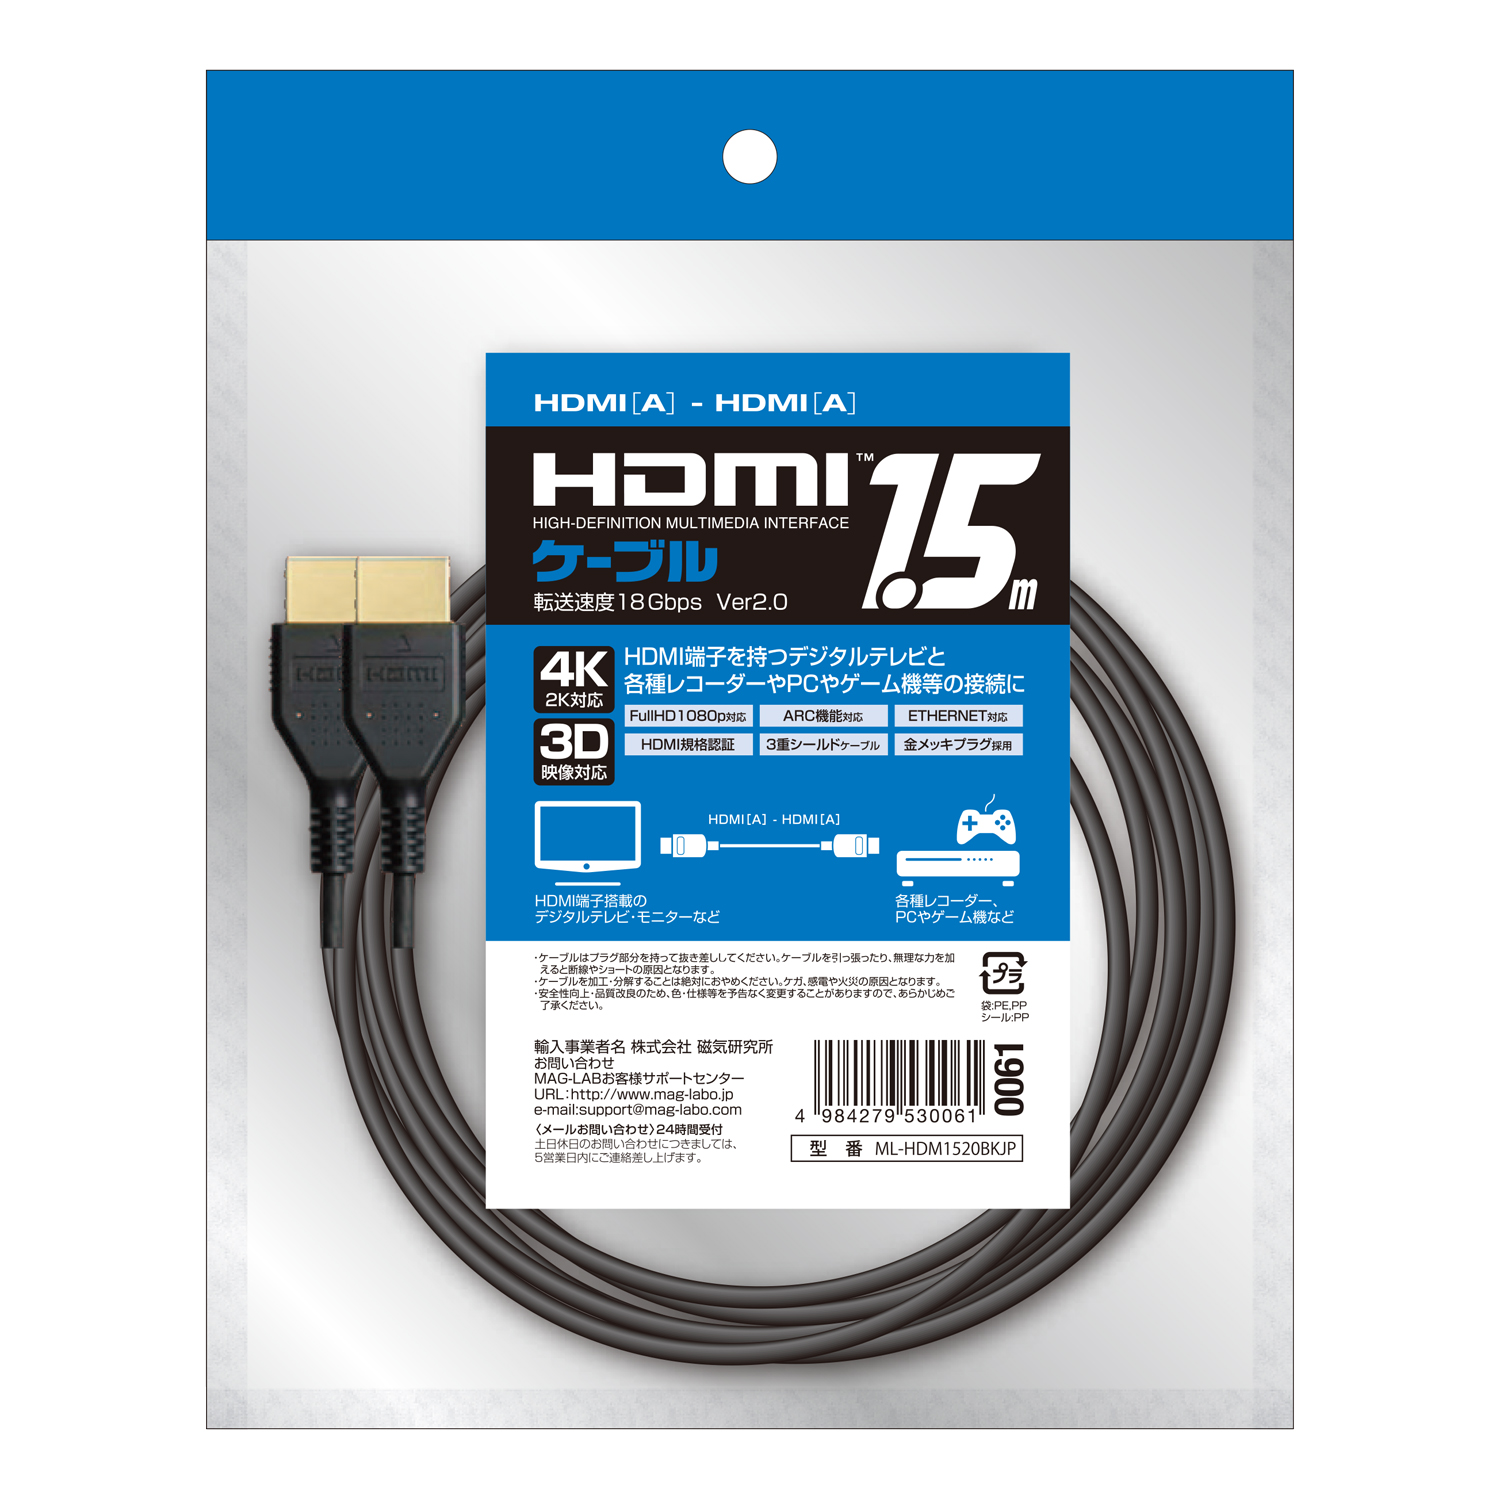 ATEN HDMIアクティブケーブル 20m 2L-7D20H 通販